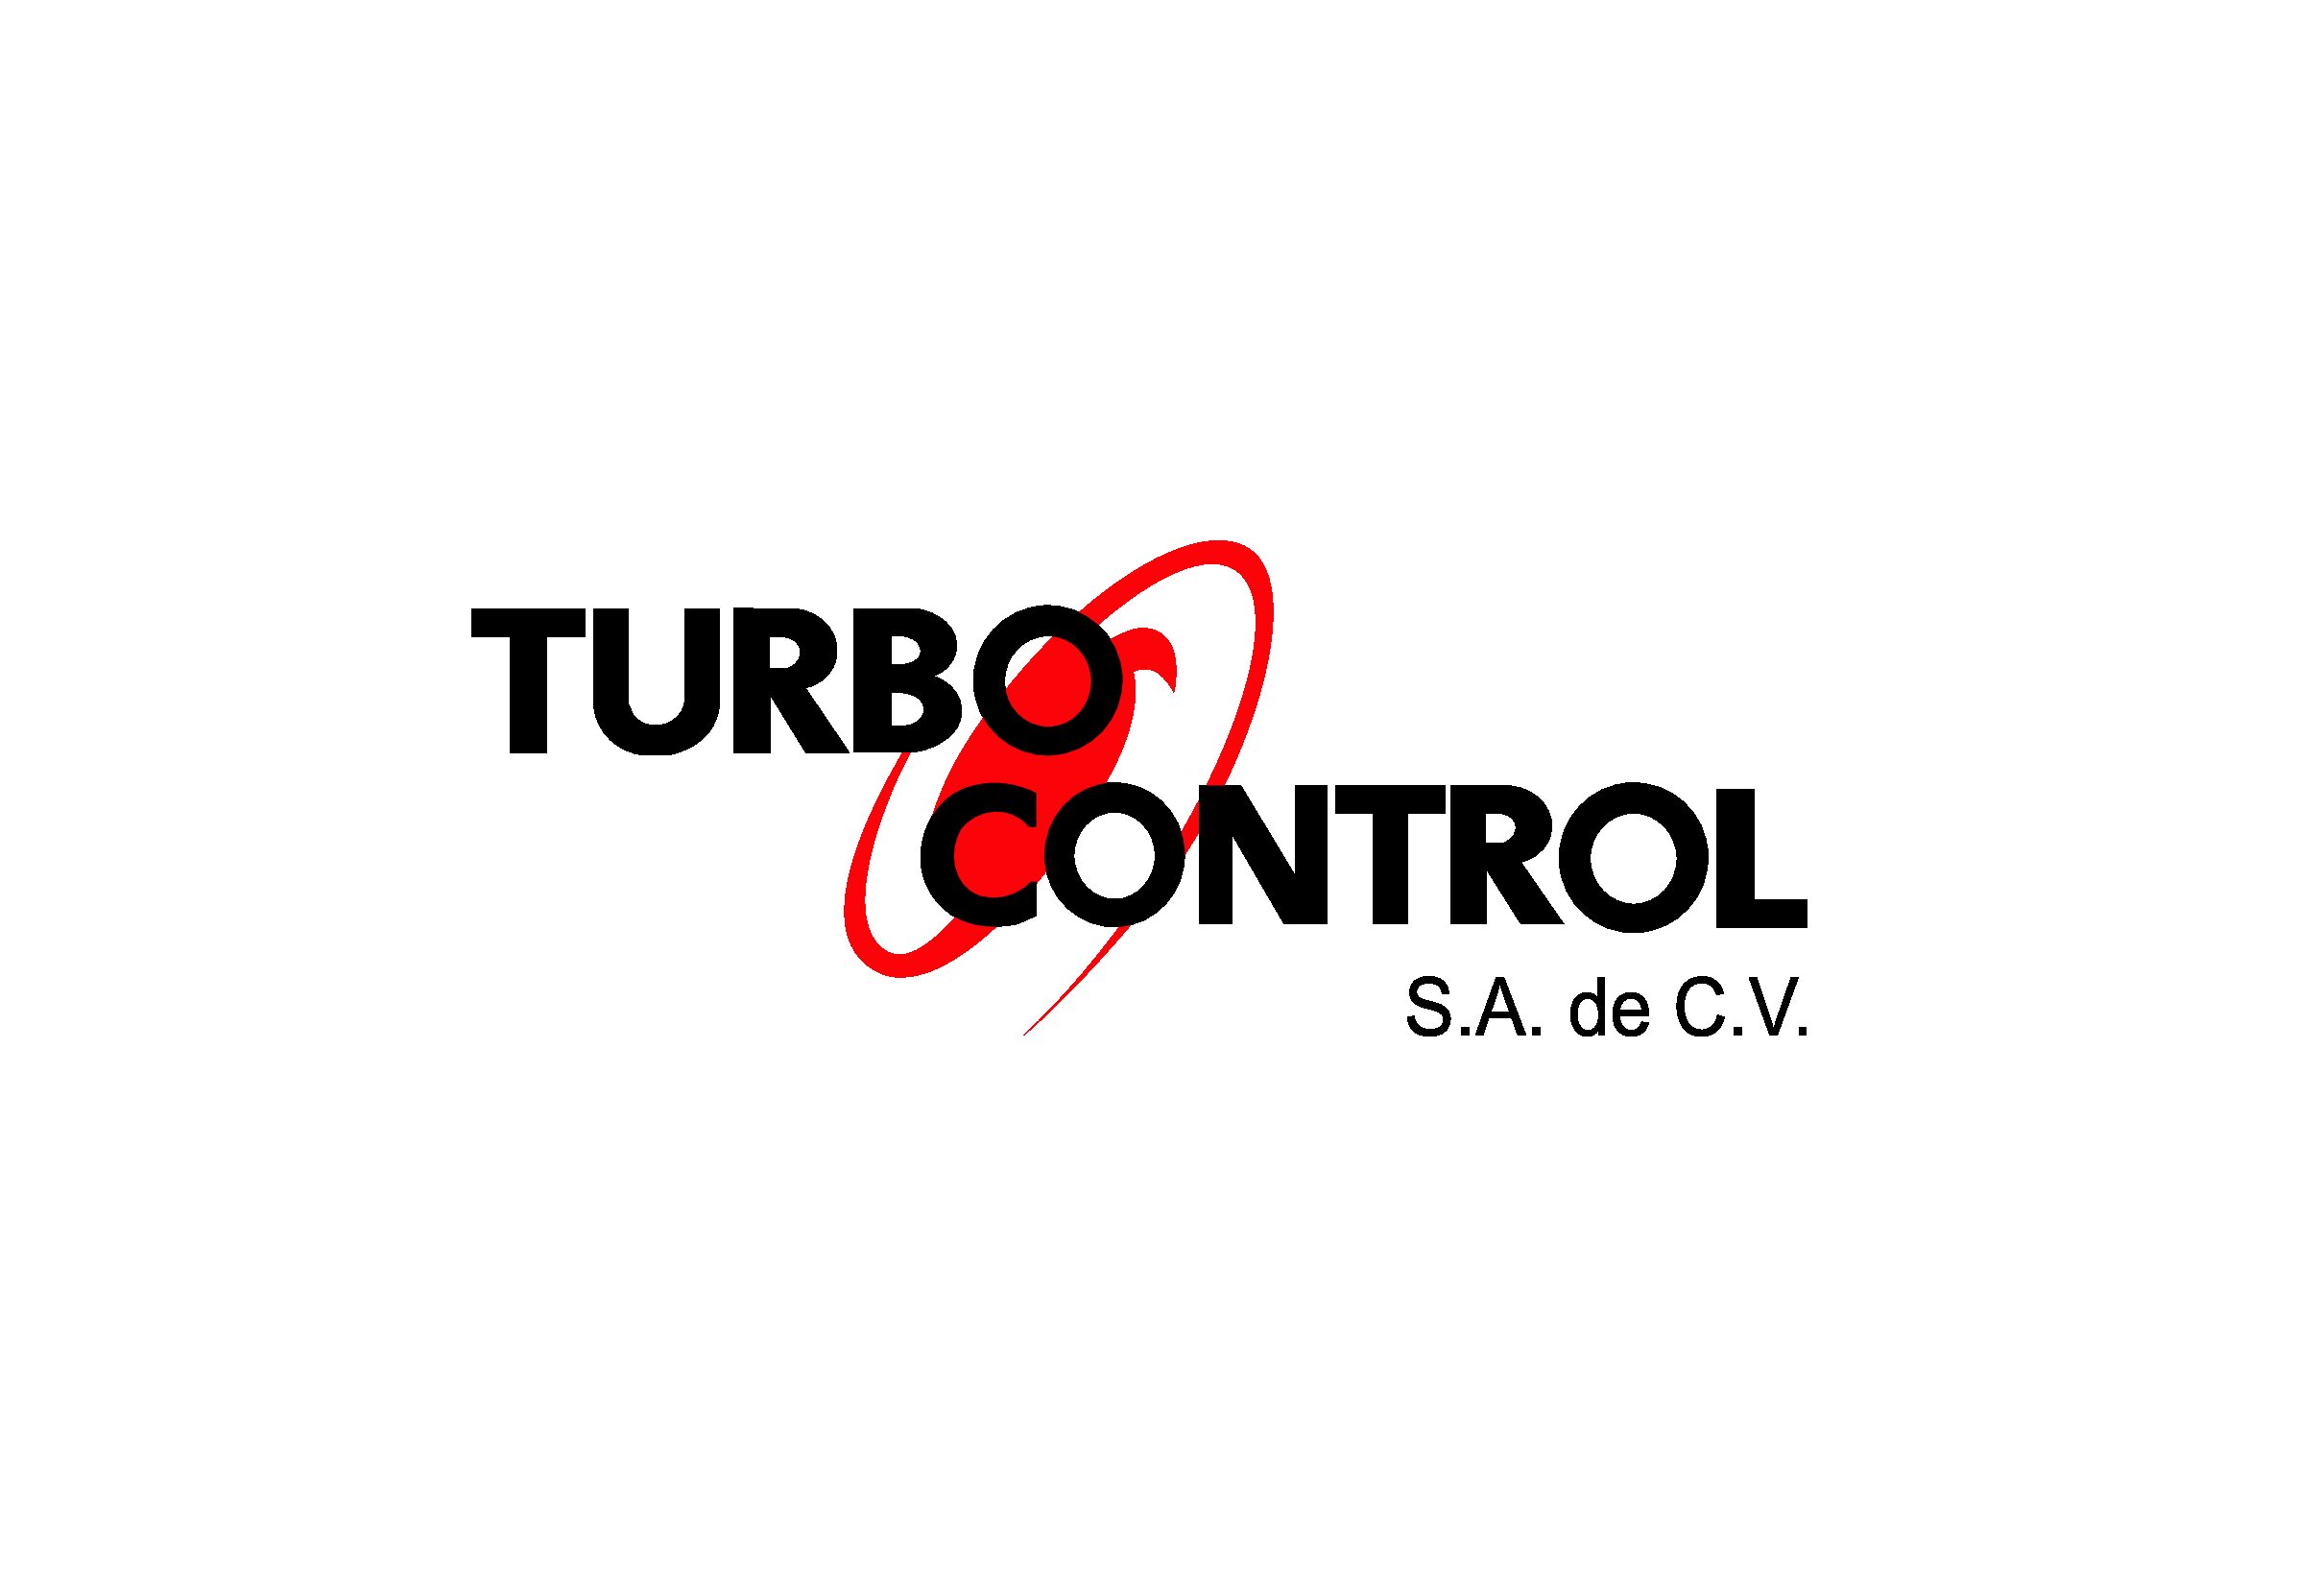 Turbo Control S.A. de C. V.